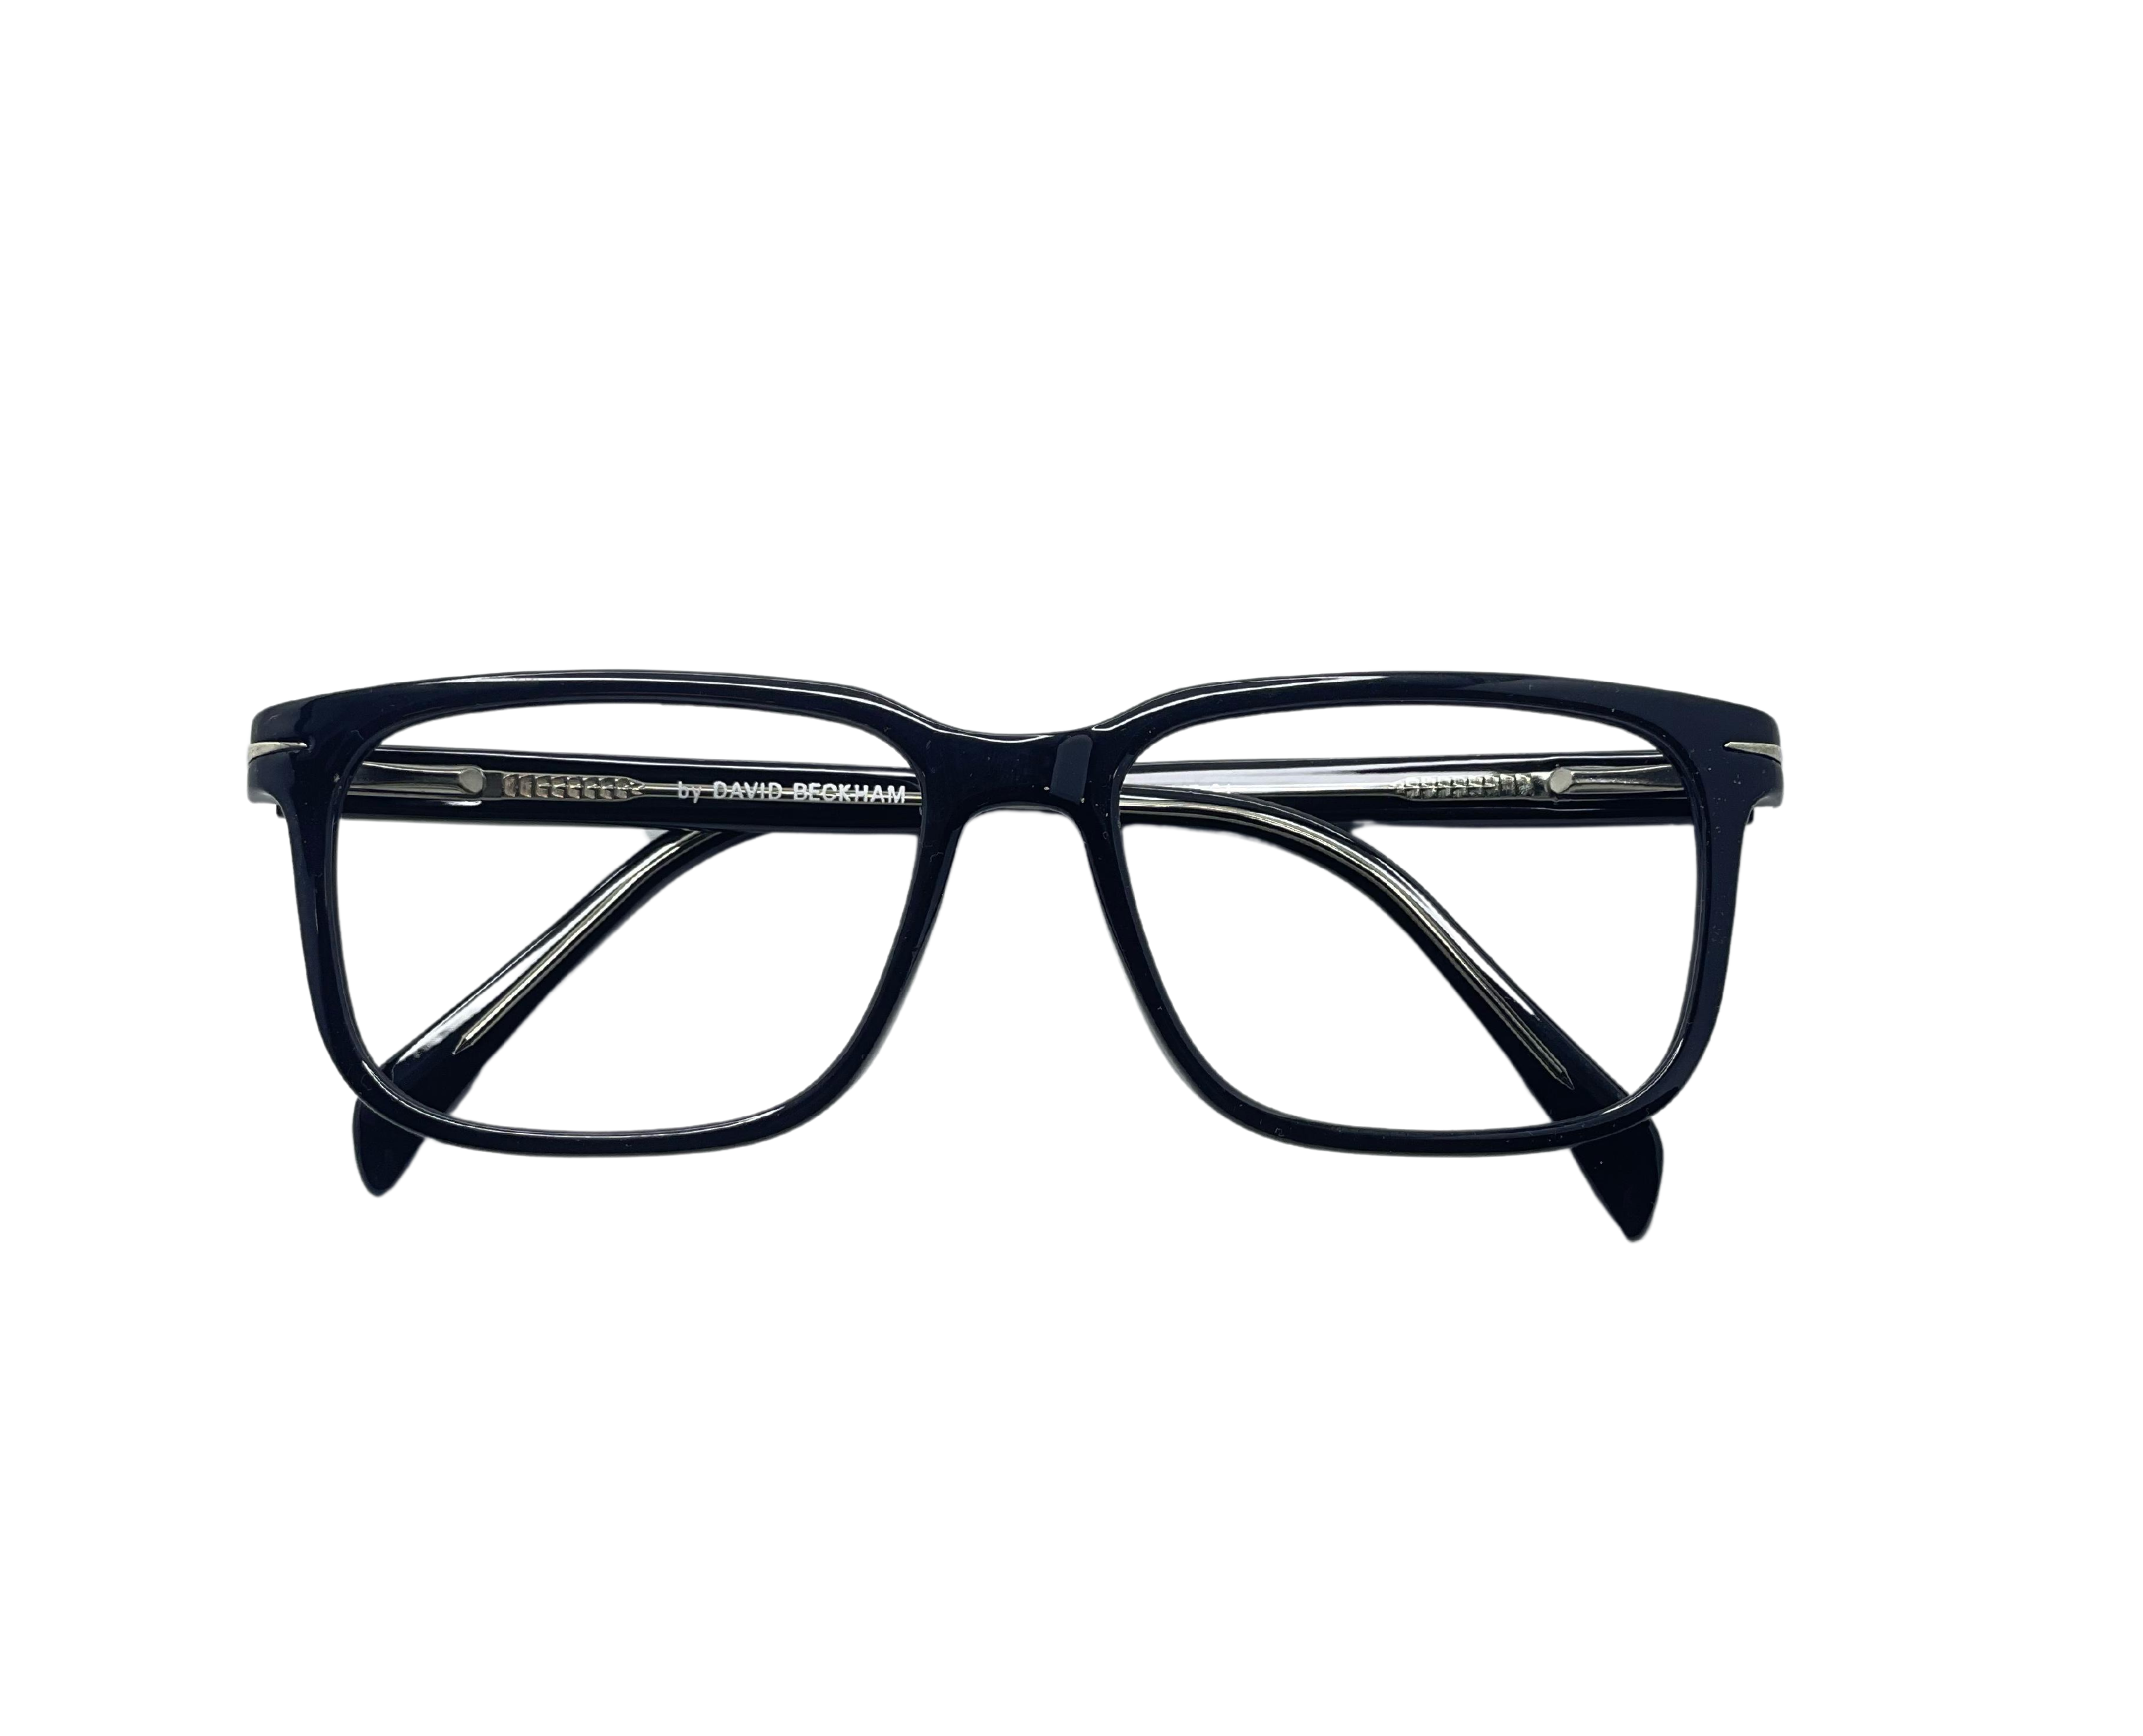 NS Deluxe - 001 - Black - Eyeglasses